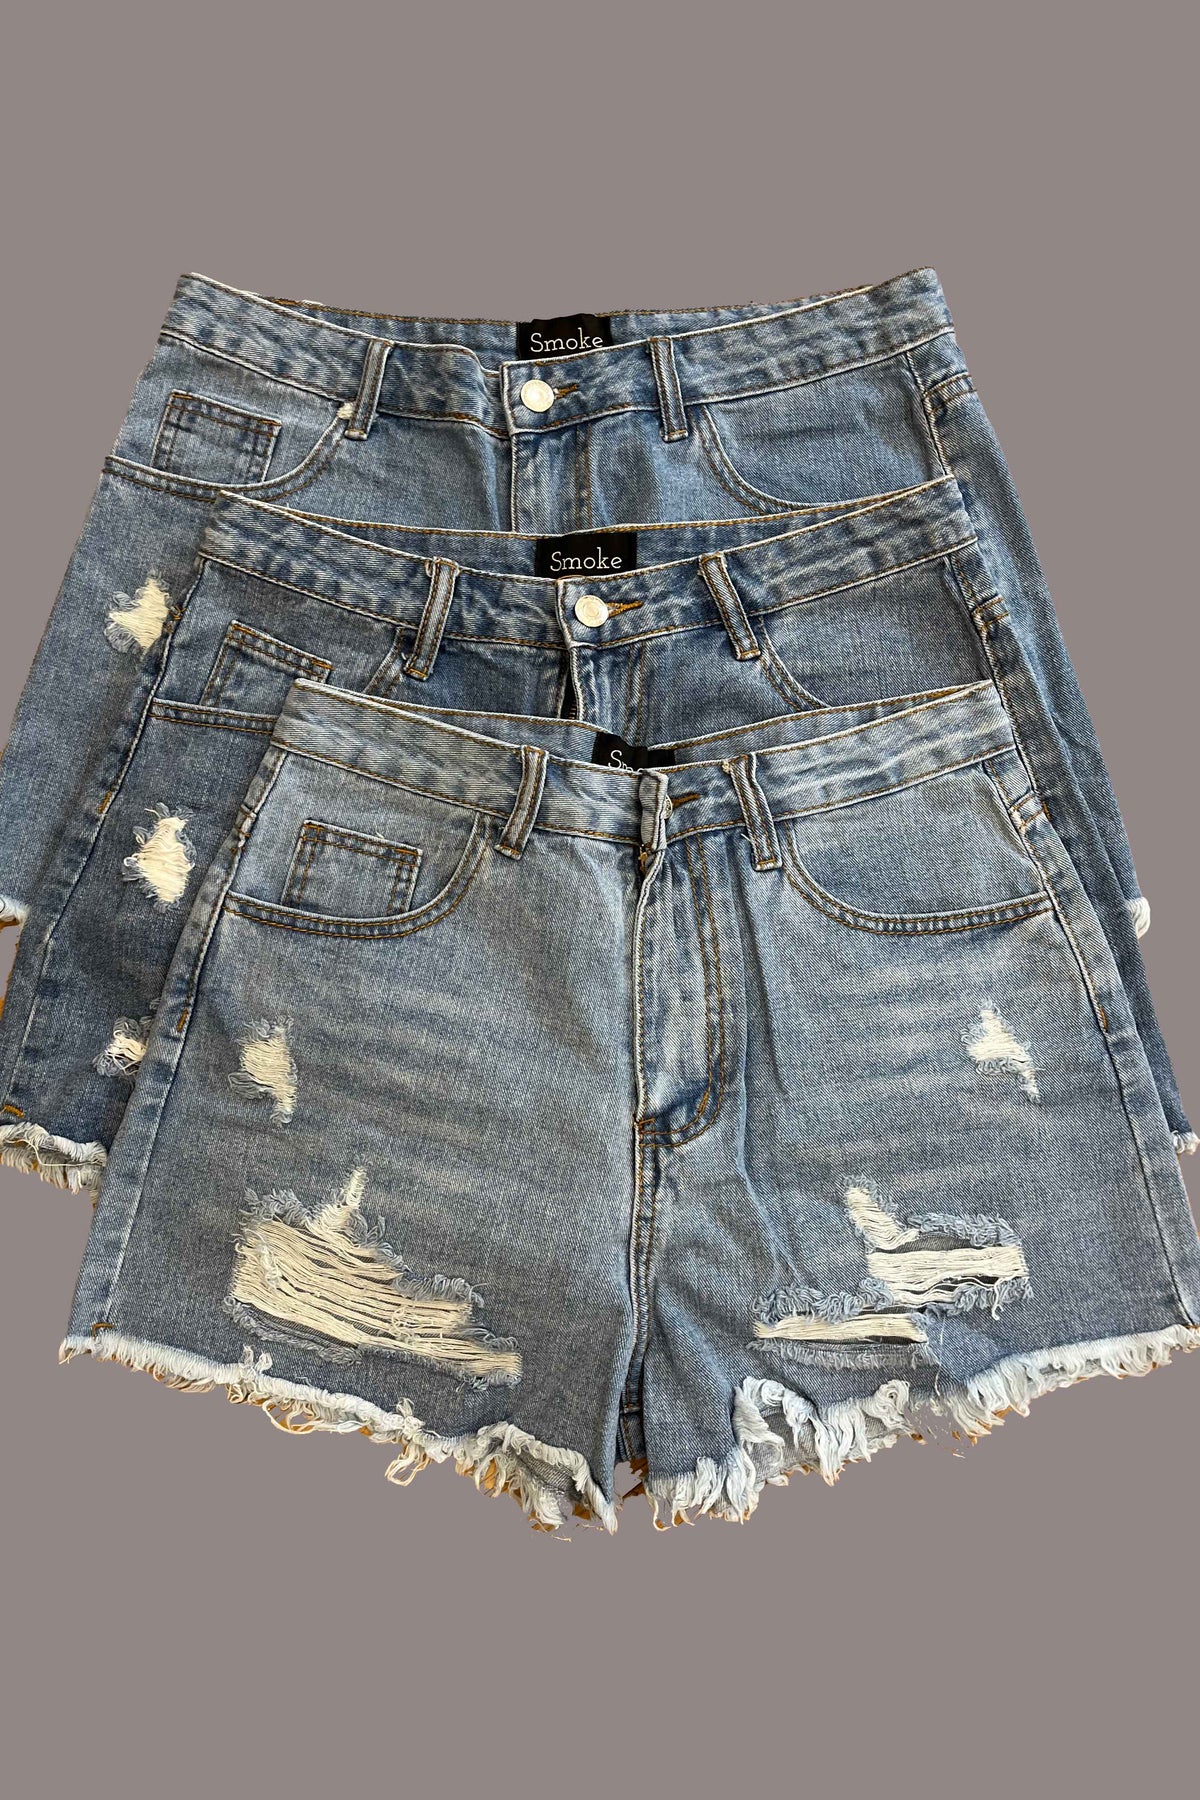 Smoke Jean Shorts - Premium Shorts from Ida Louise Boutique - Just $12! Shop now at Ida Louise Boutique